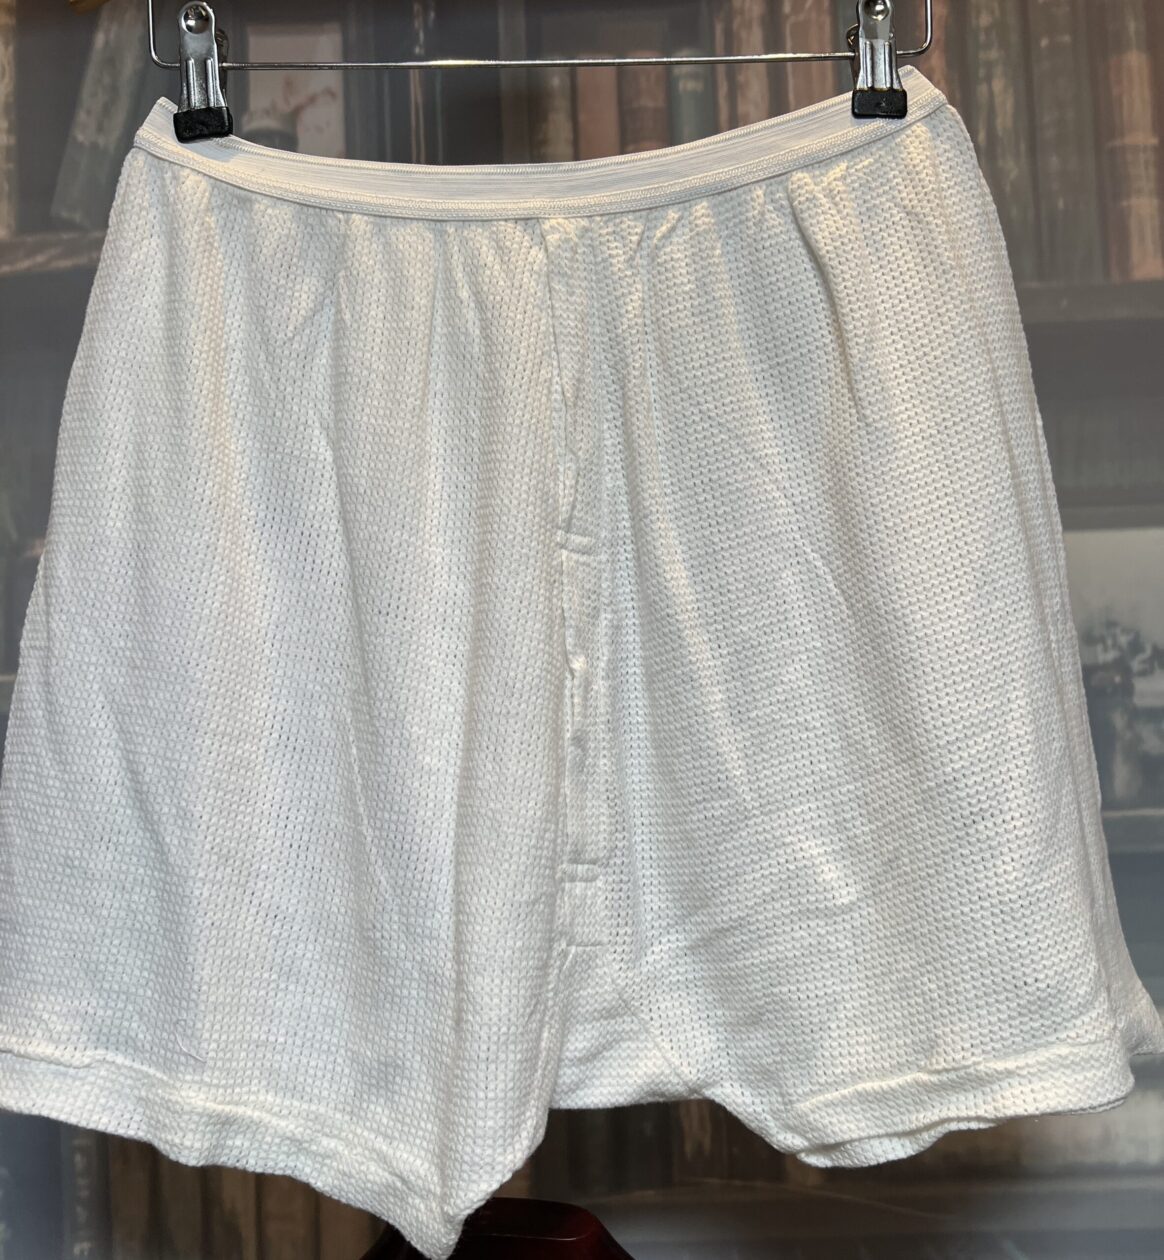 Vintage Old Store Stock Cellular Cotton Trunks Underpants. Aertex ...